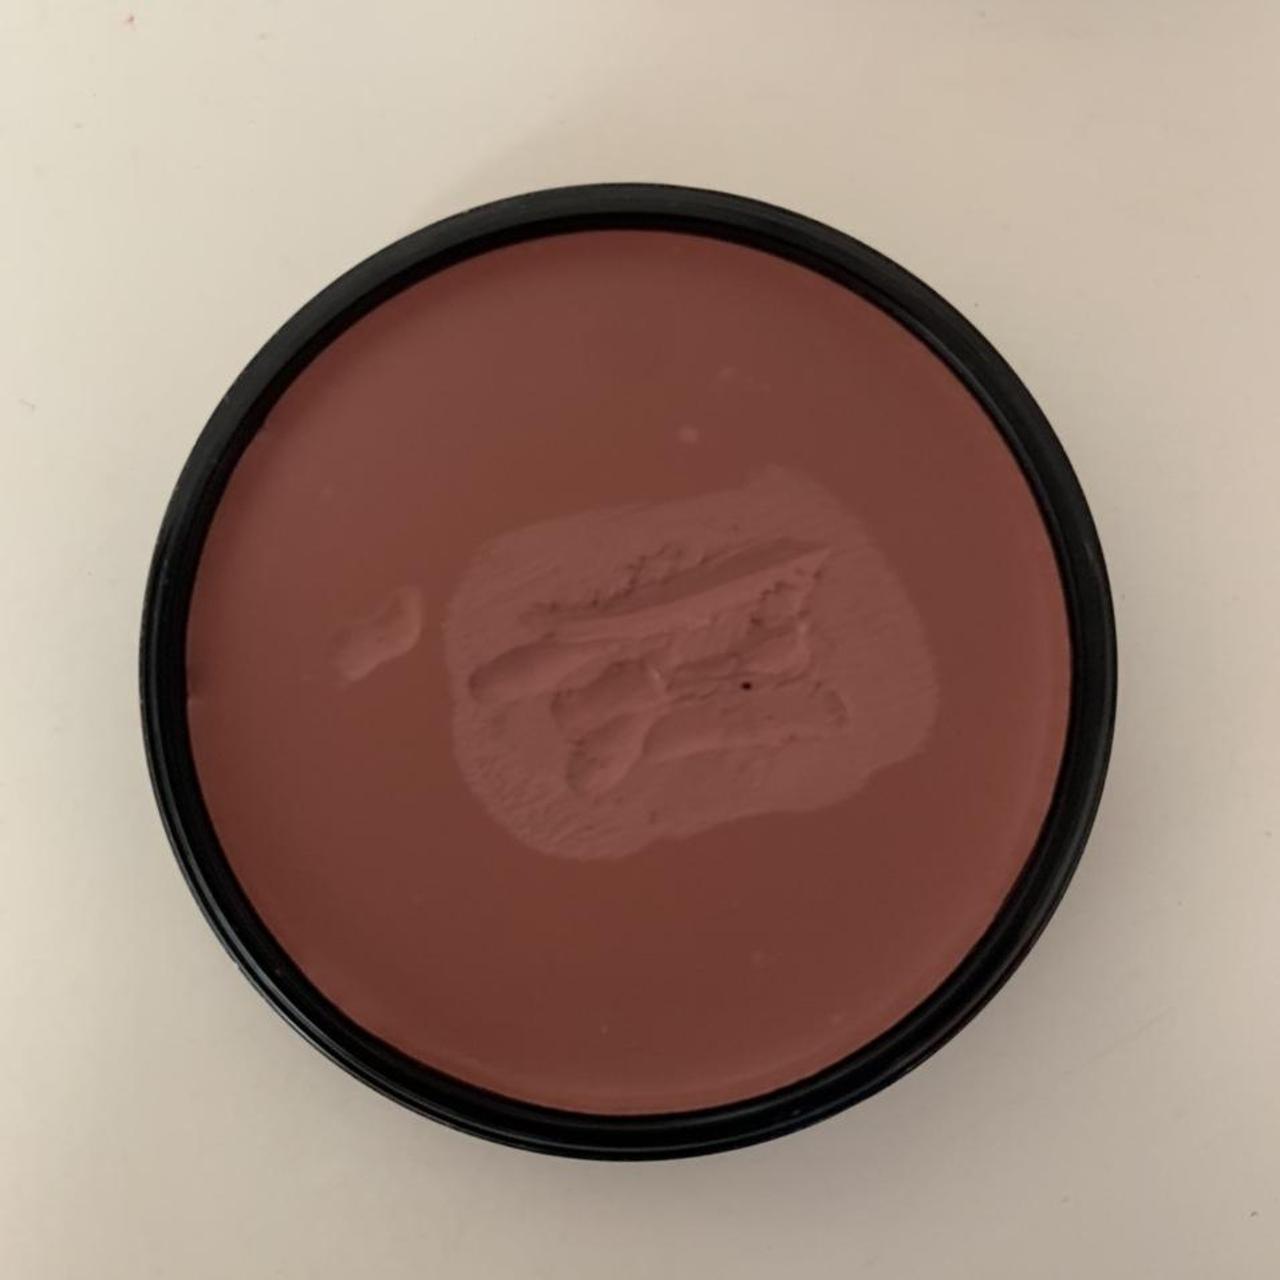 Product Image 3 - Graftobian cream blush in dusty